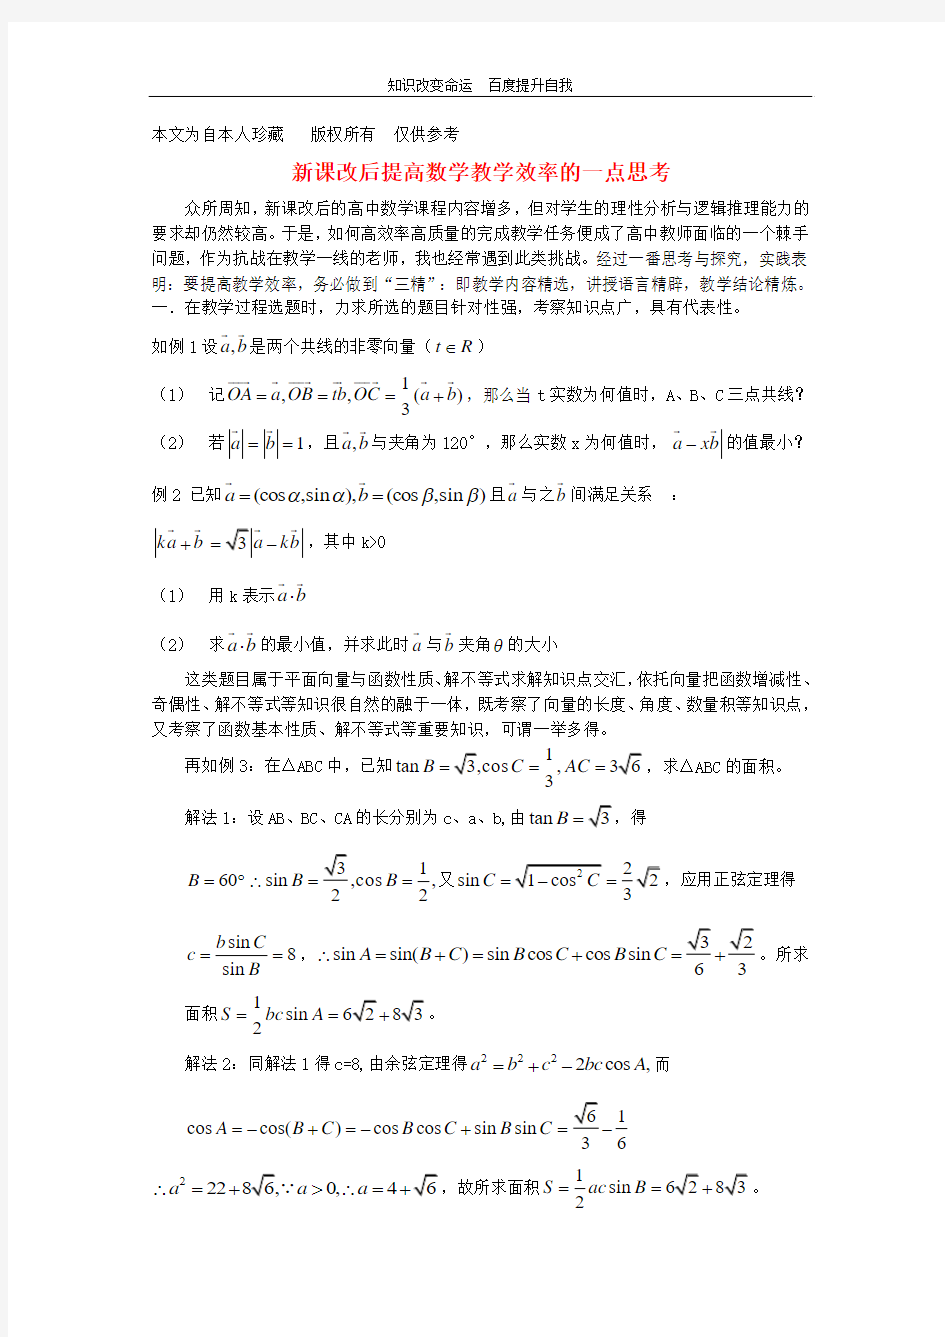 b5新课改后提高数学教学效率的一点思考 苏教版 (2)